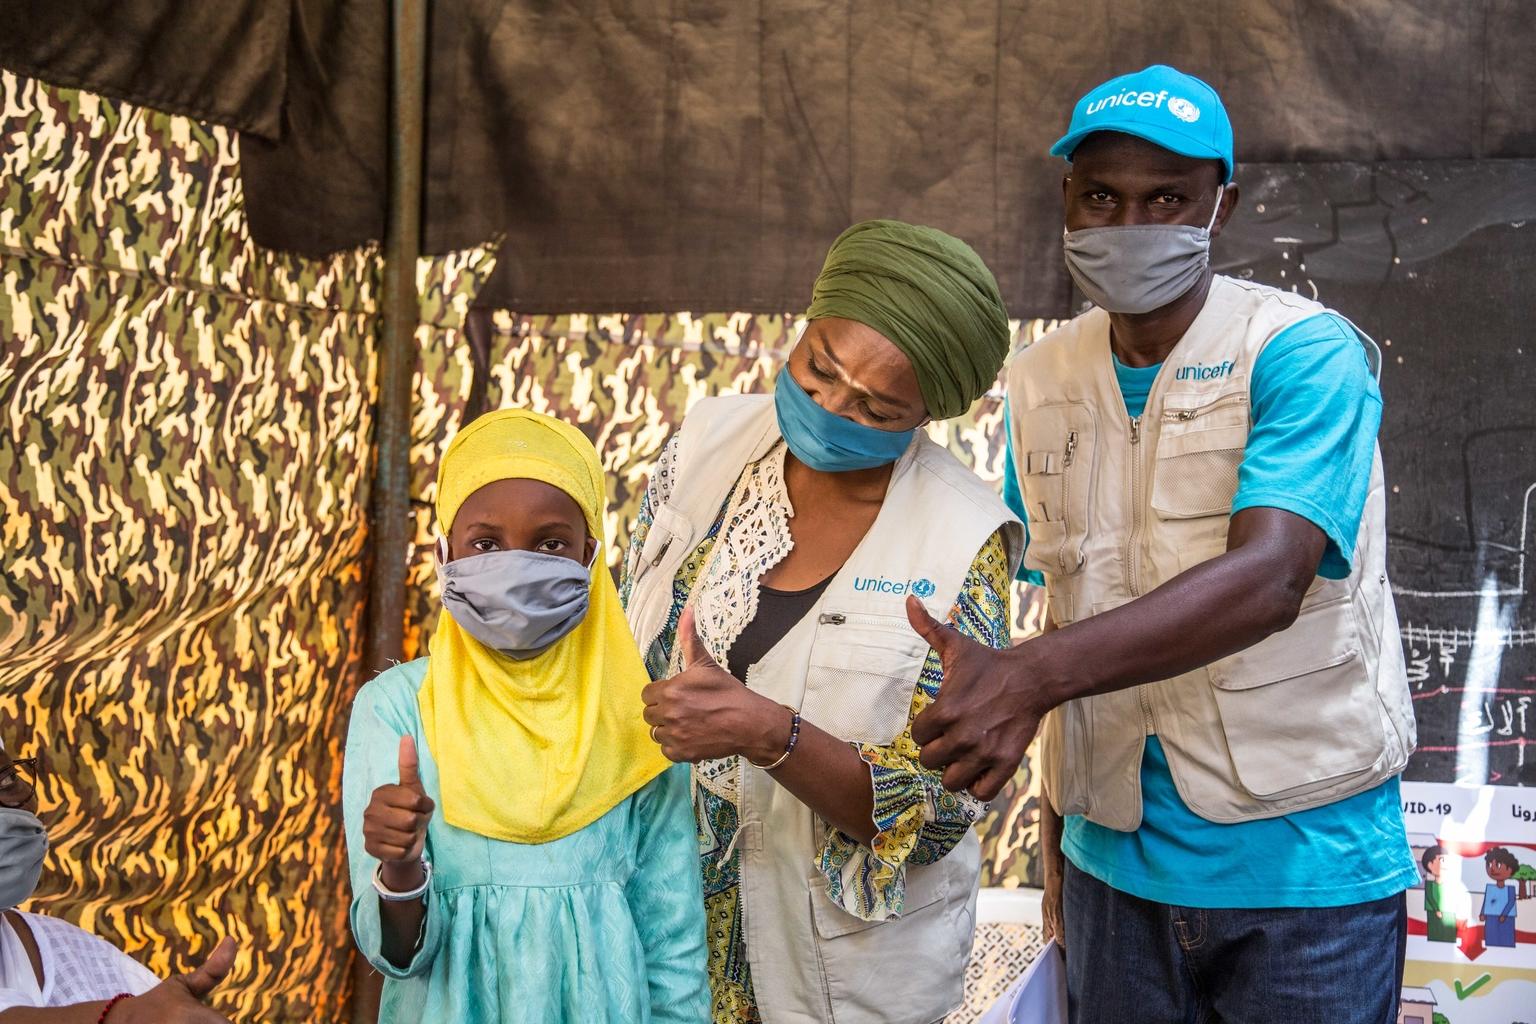 Fatoumata, 11 years old, in the company of the UNICEF team raising awareness about coronavirus